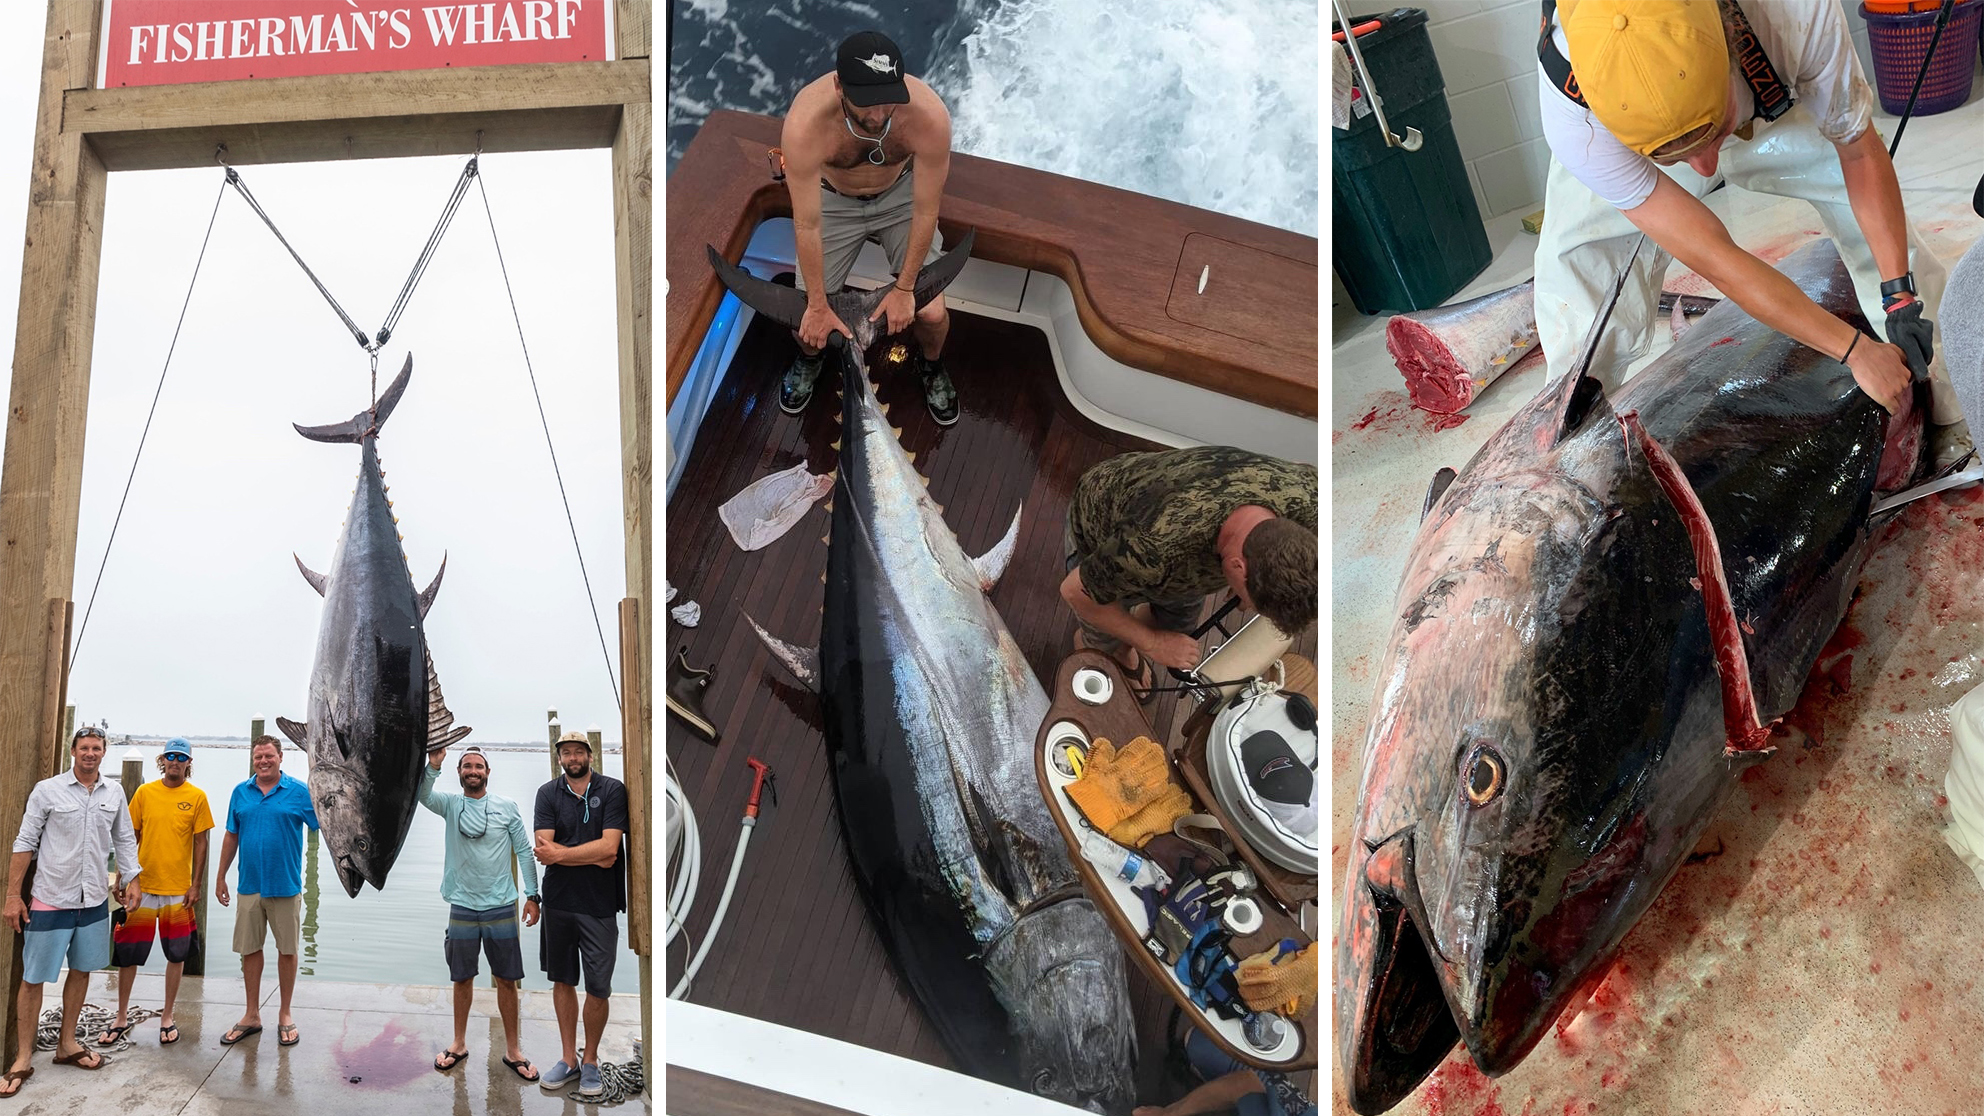 South Texas fisherman lands state record bluefin tuna off Port Aransas coast